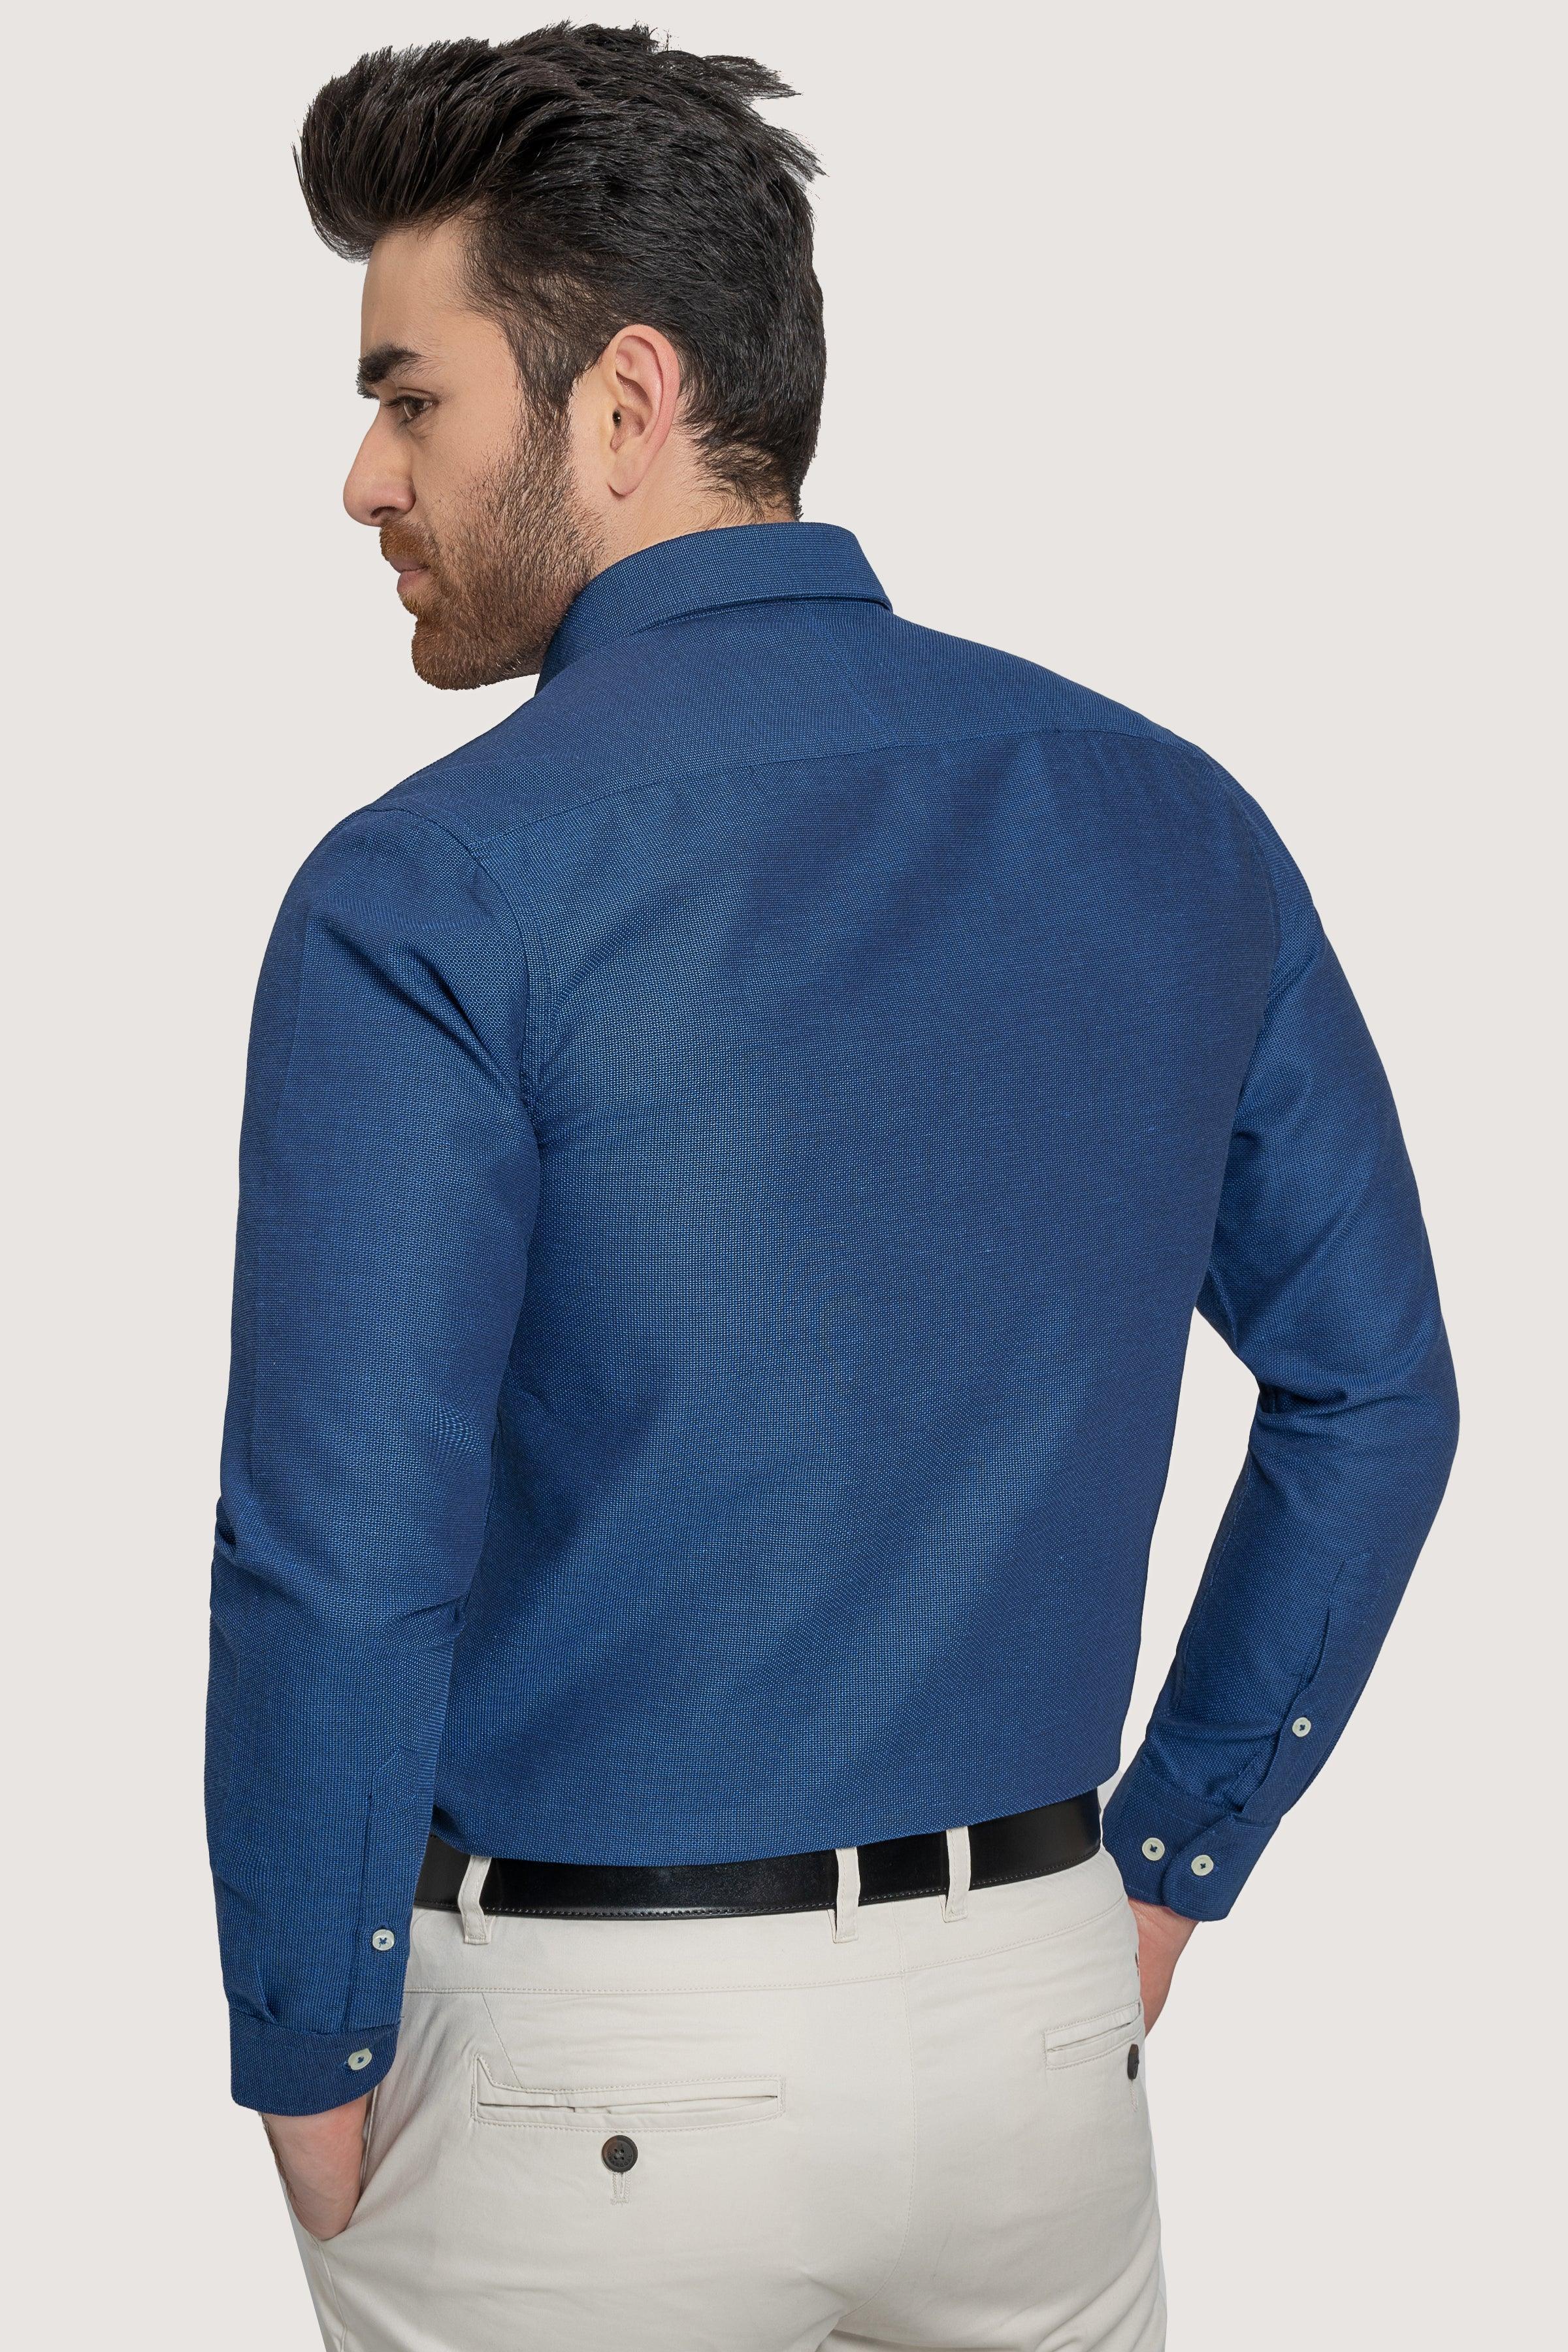 SMART SHIRT BLUE SELF at Charcoal Clothing